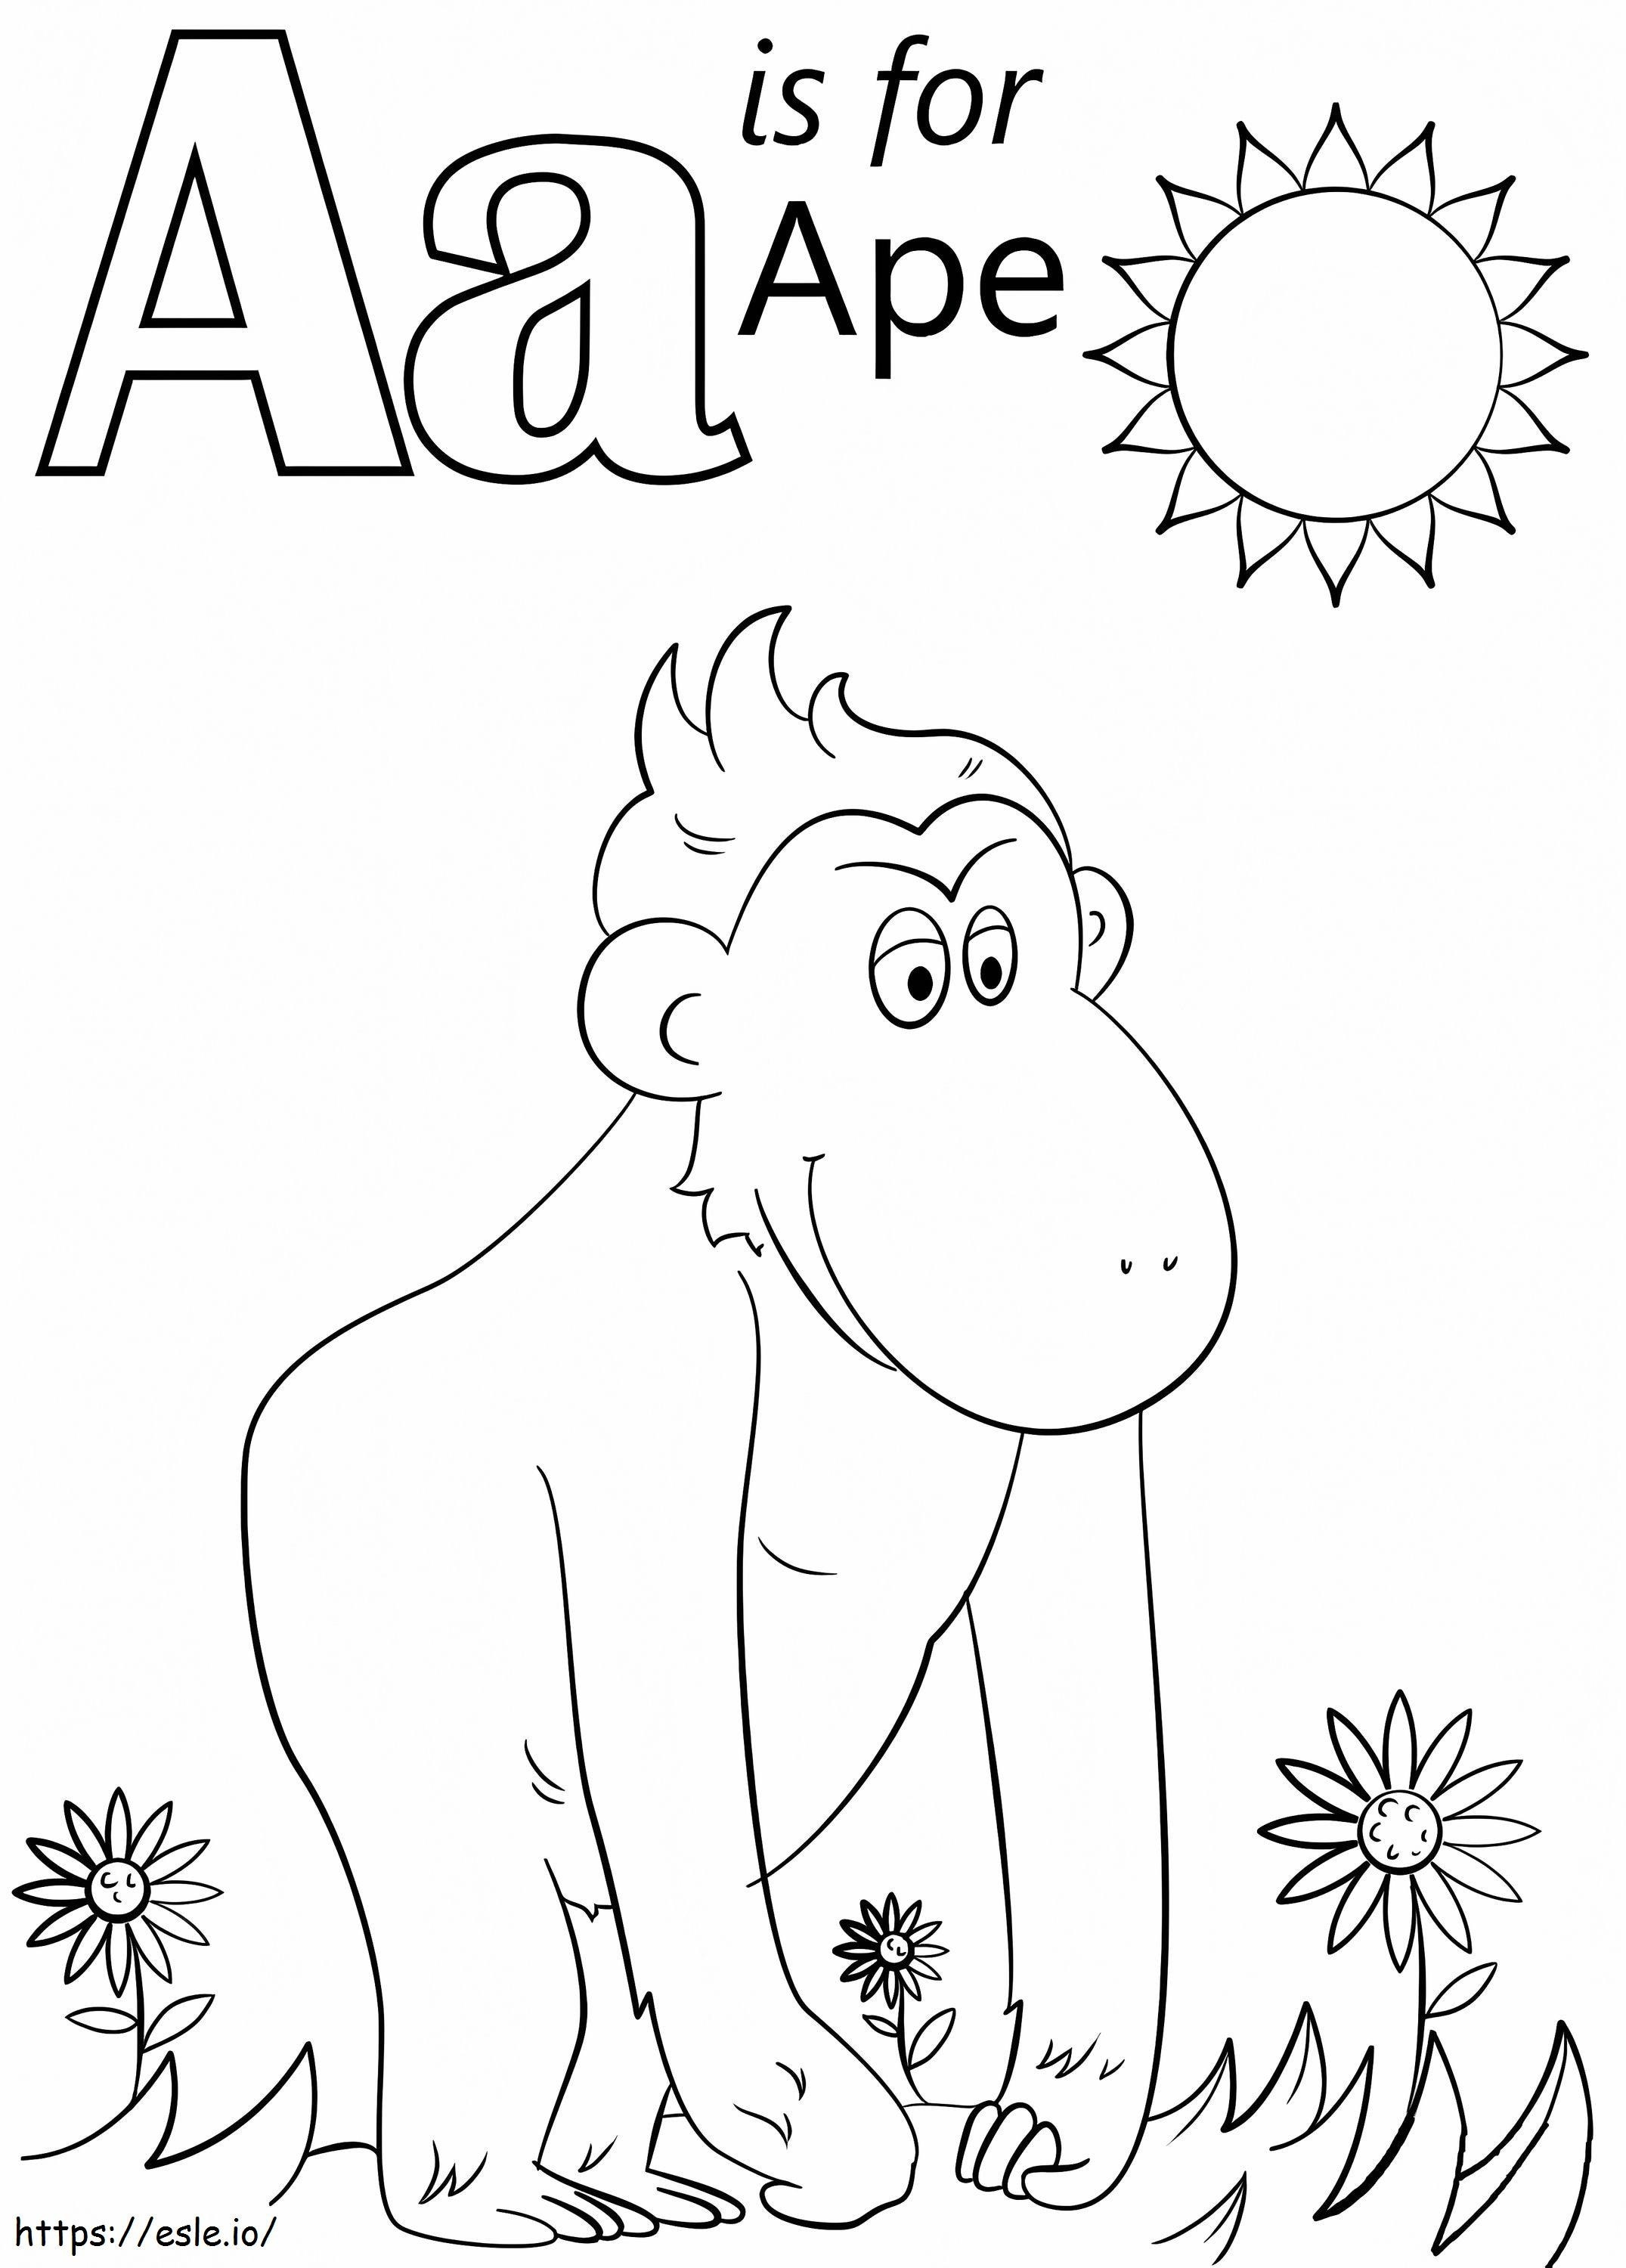 Ape Letter A coloring page